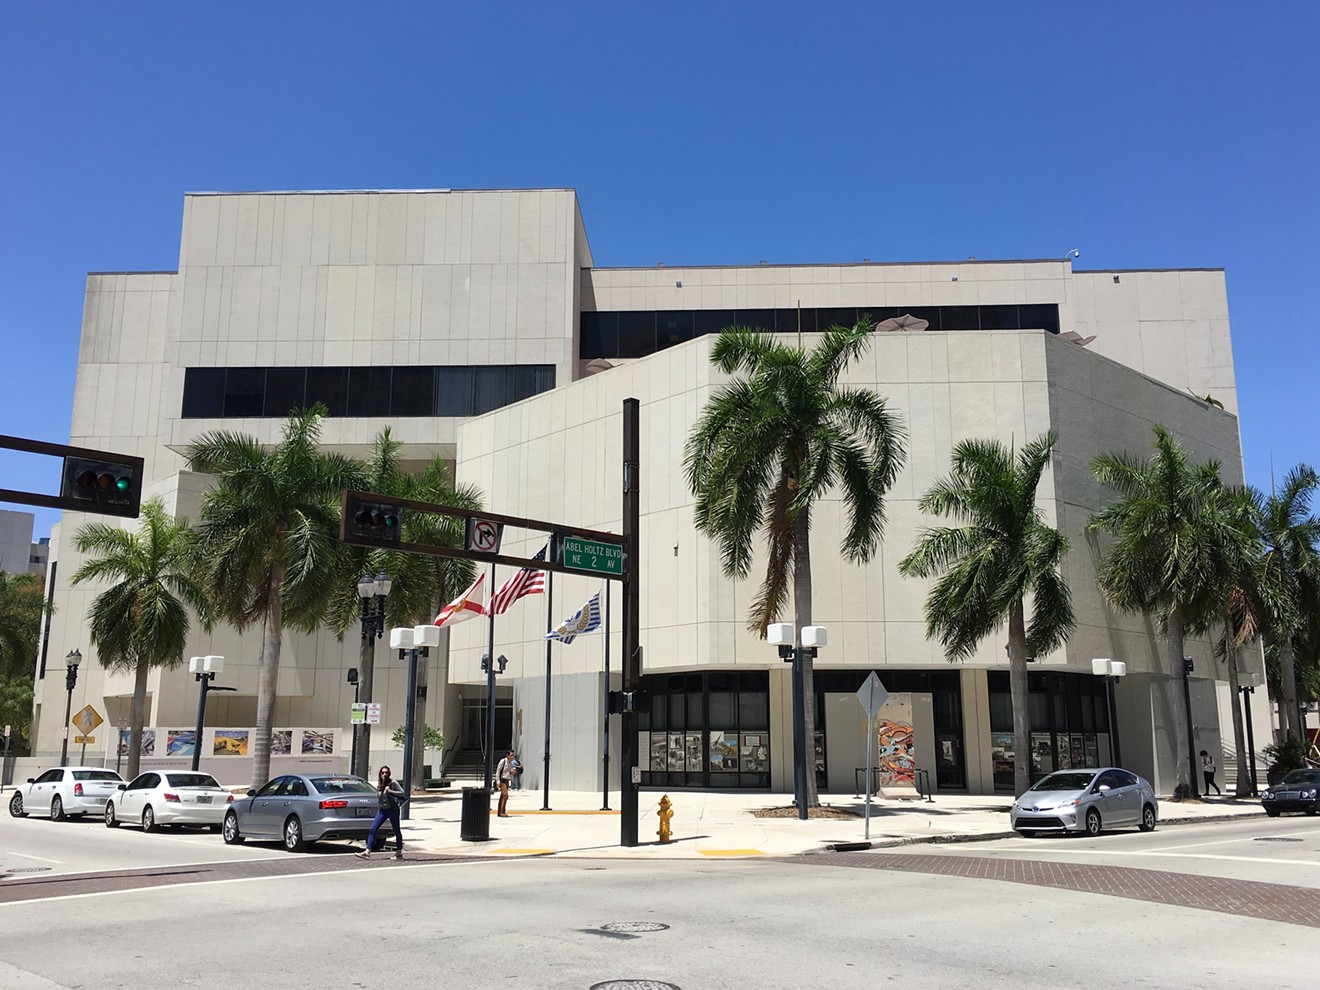 Miami Dade College's Wolfson campus downtown